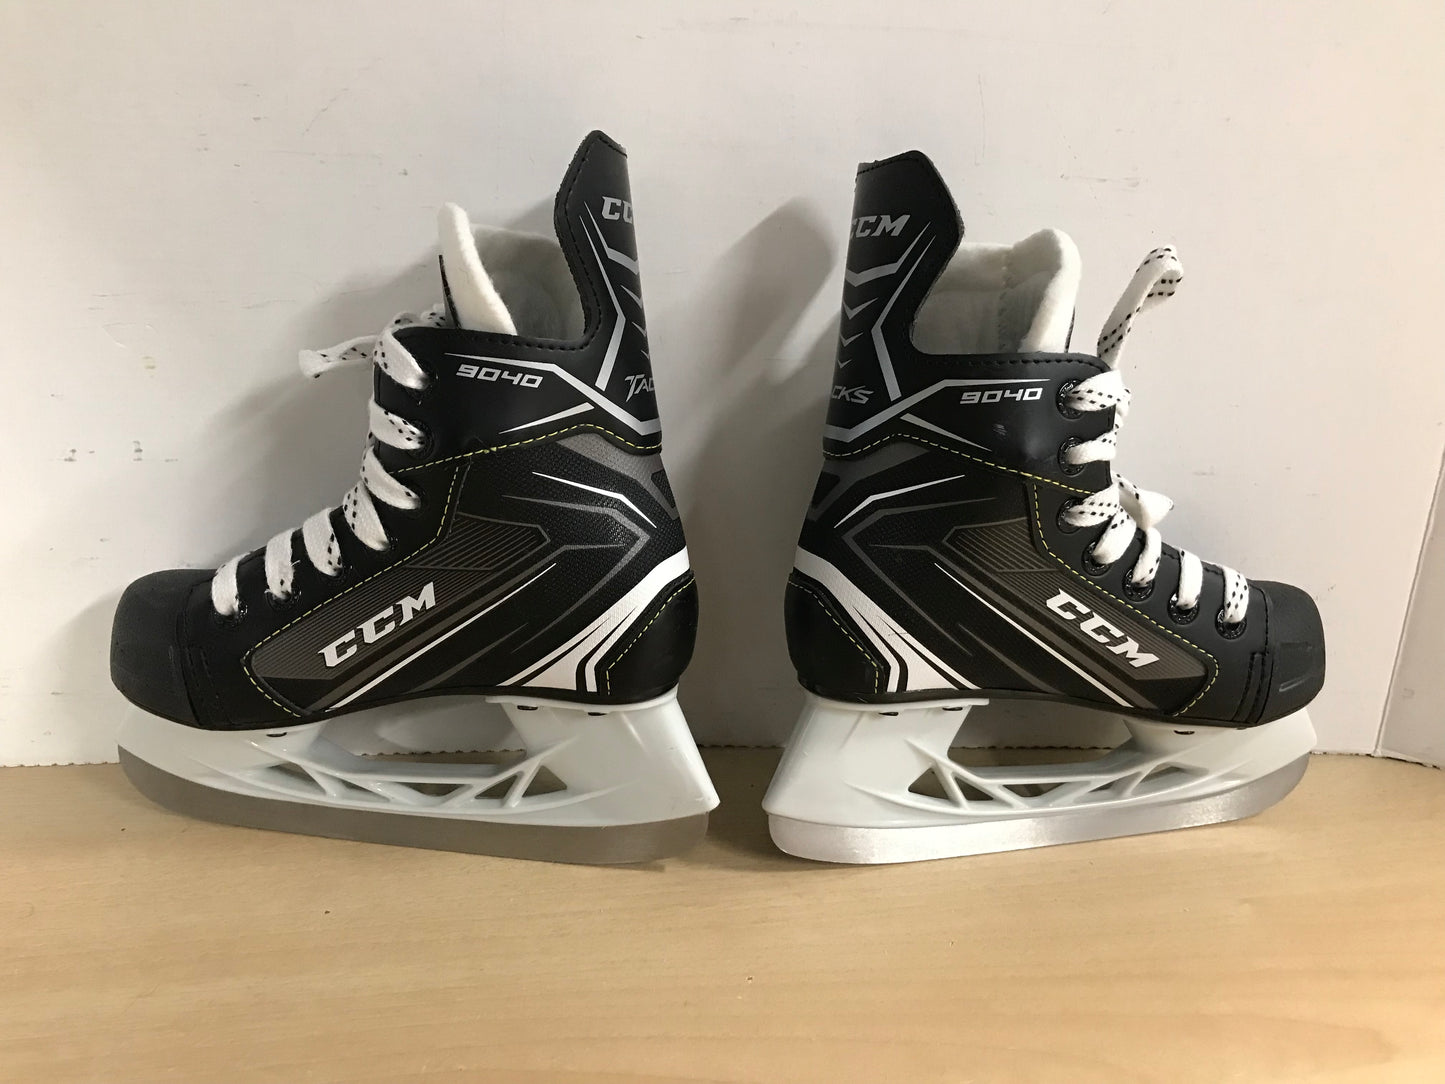 Hockey Skates Child Size 12 Shoe Size CCM 9040 NEW